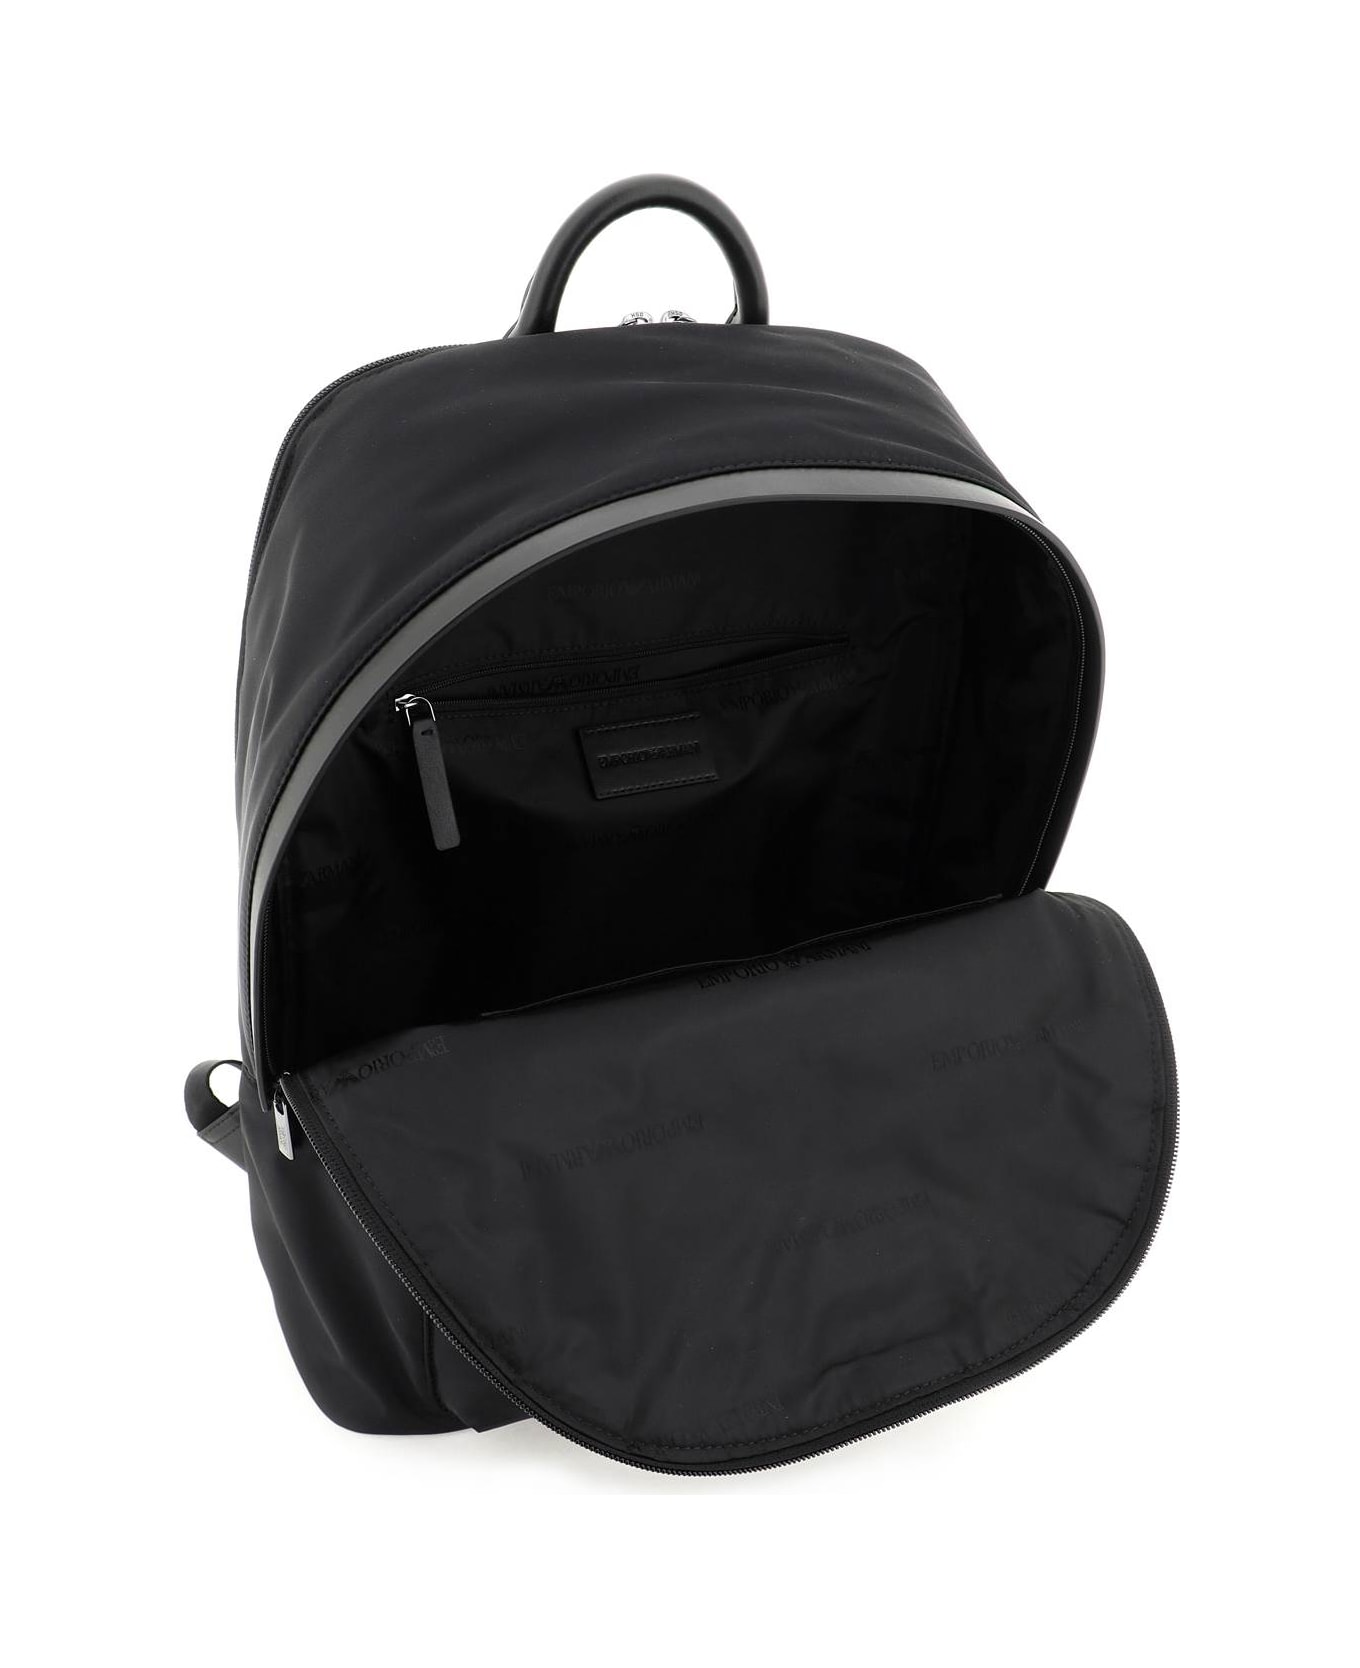 Emporio Armani Recycled Nylon Backpack - Black